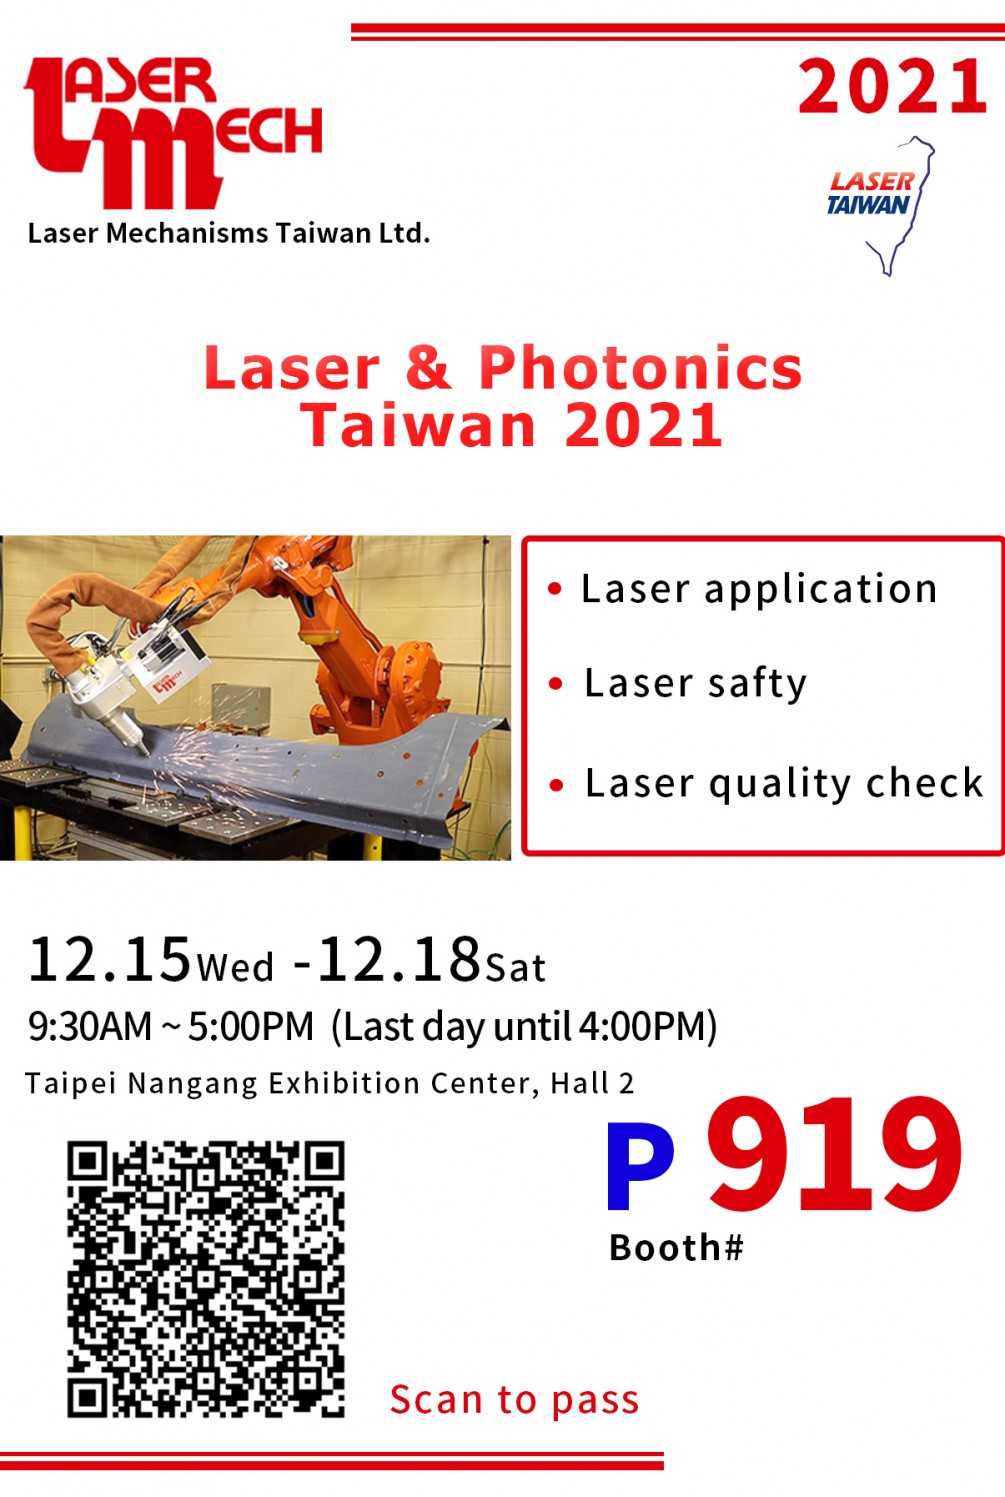 Laser & Photonics Taiwan 2021